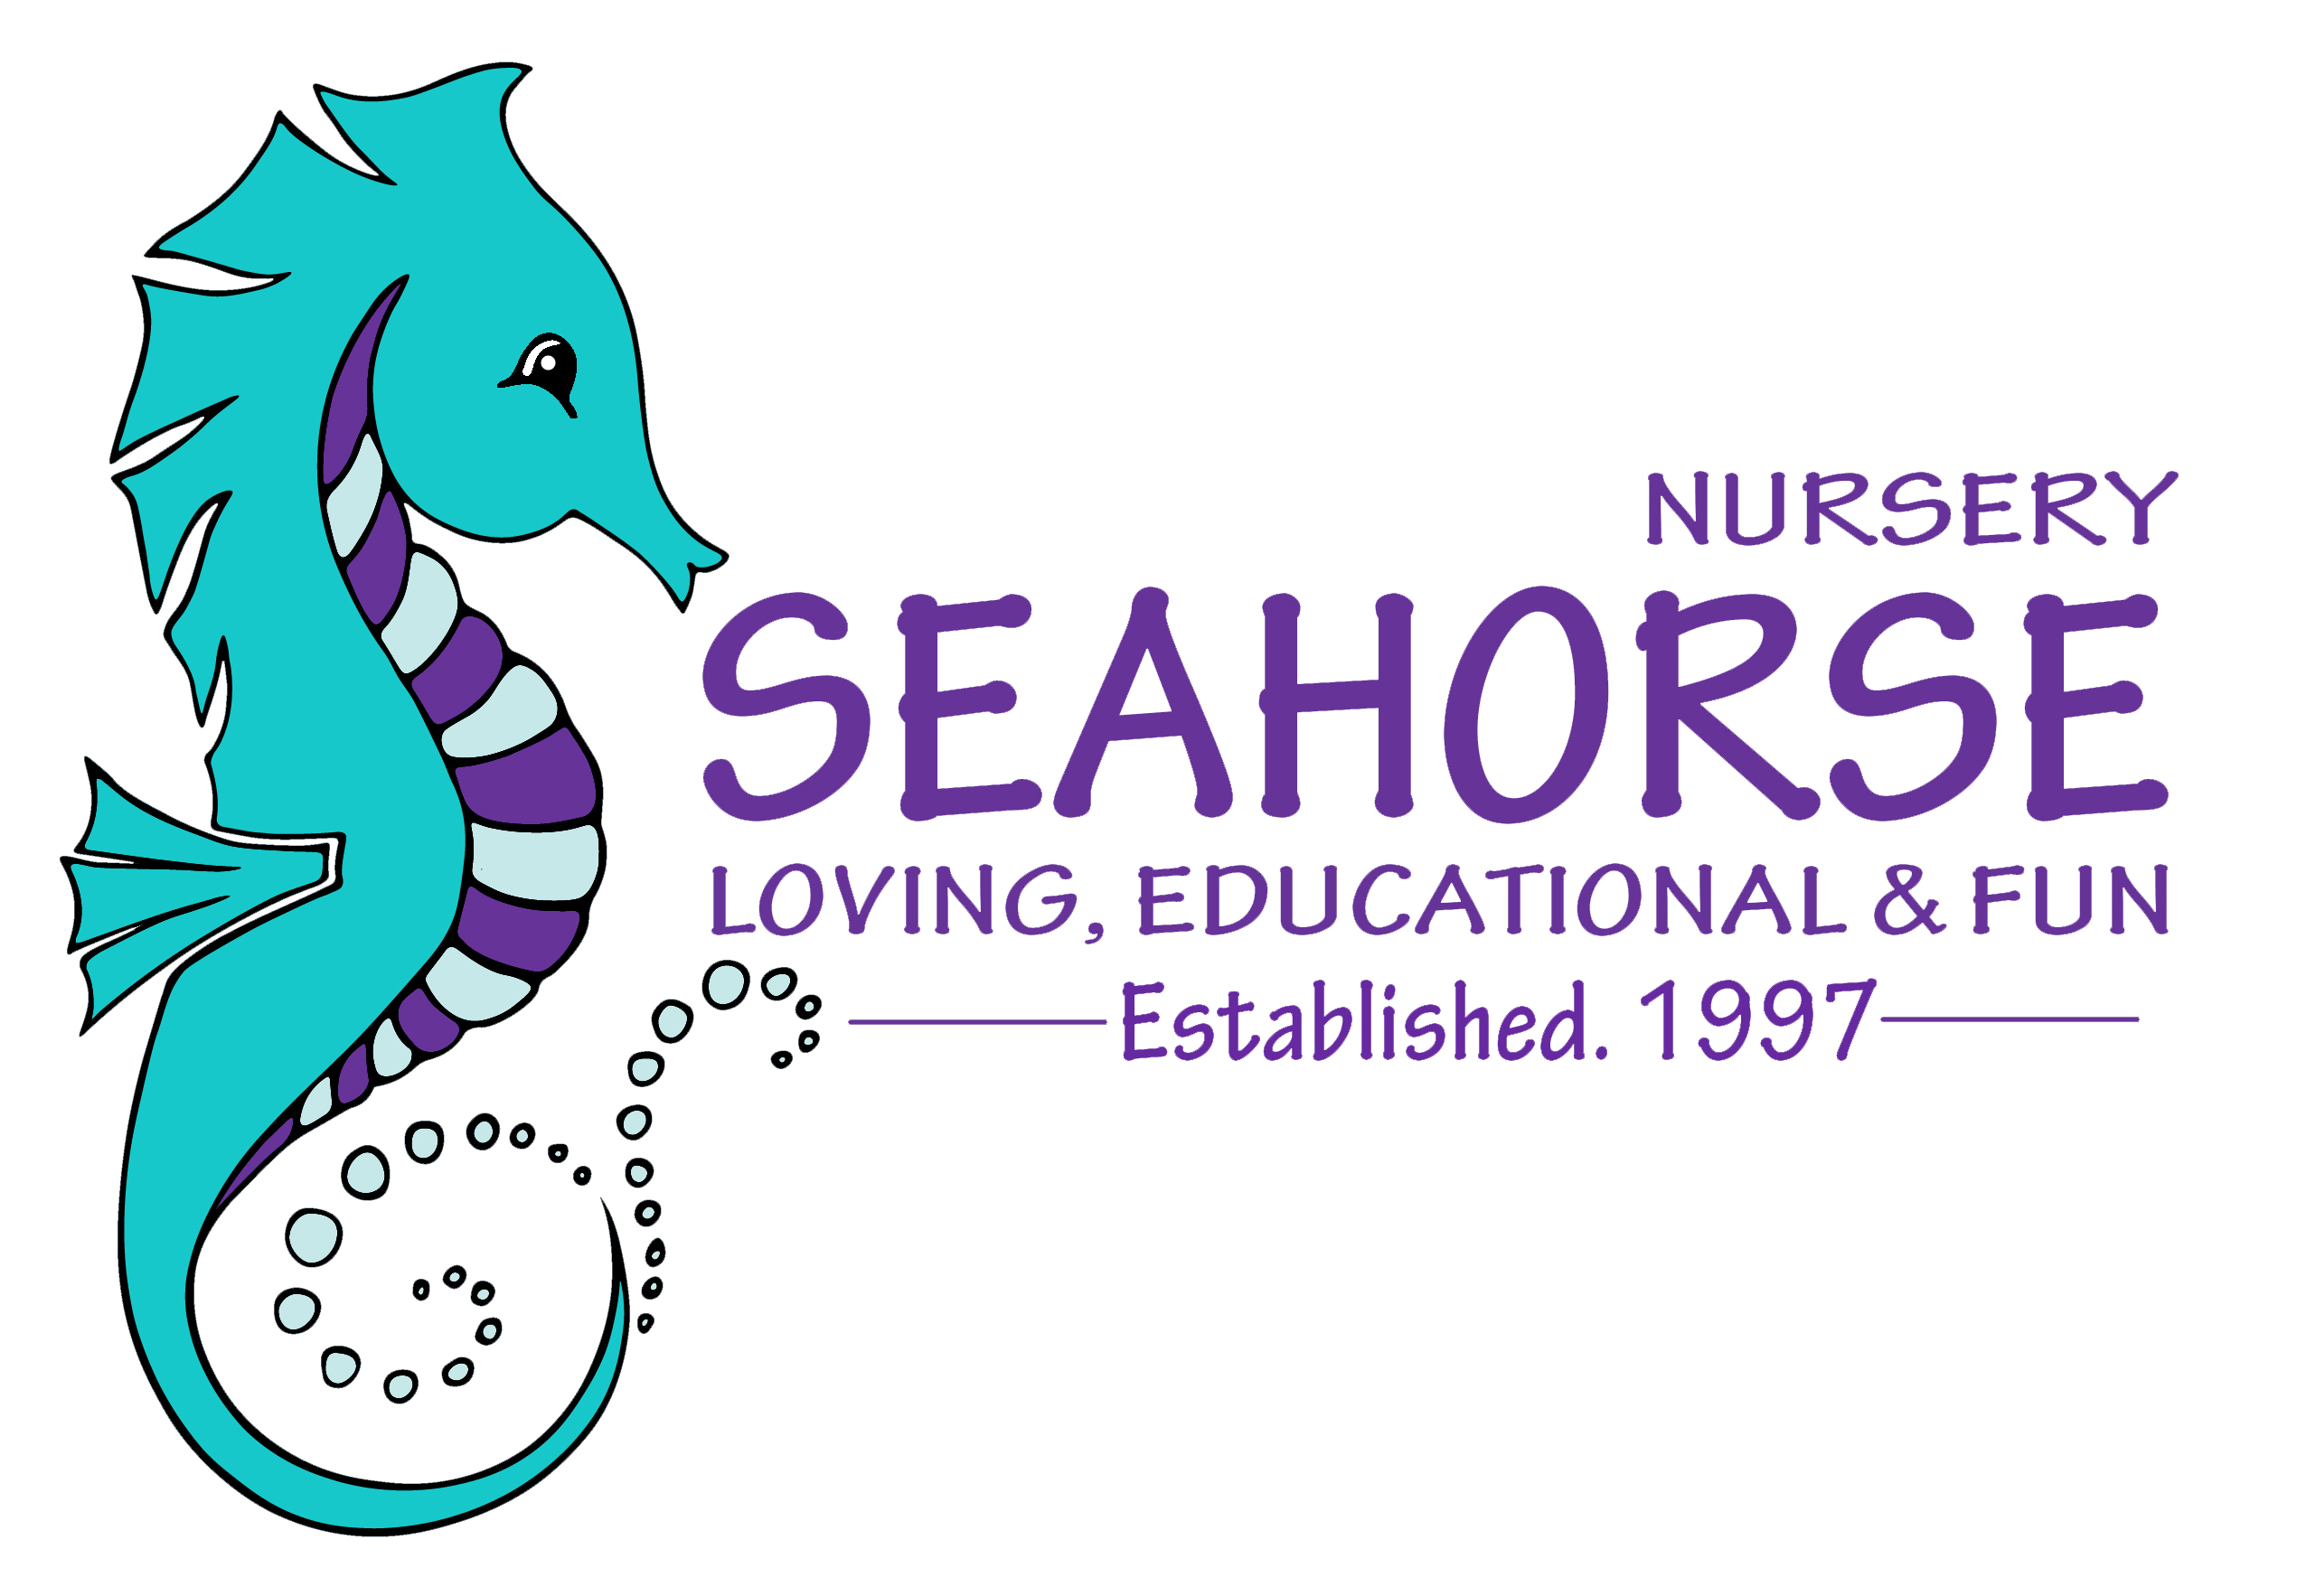 Seahorse nursery logo